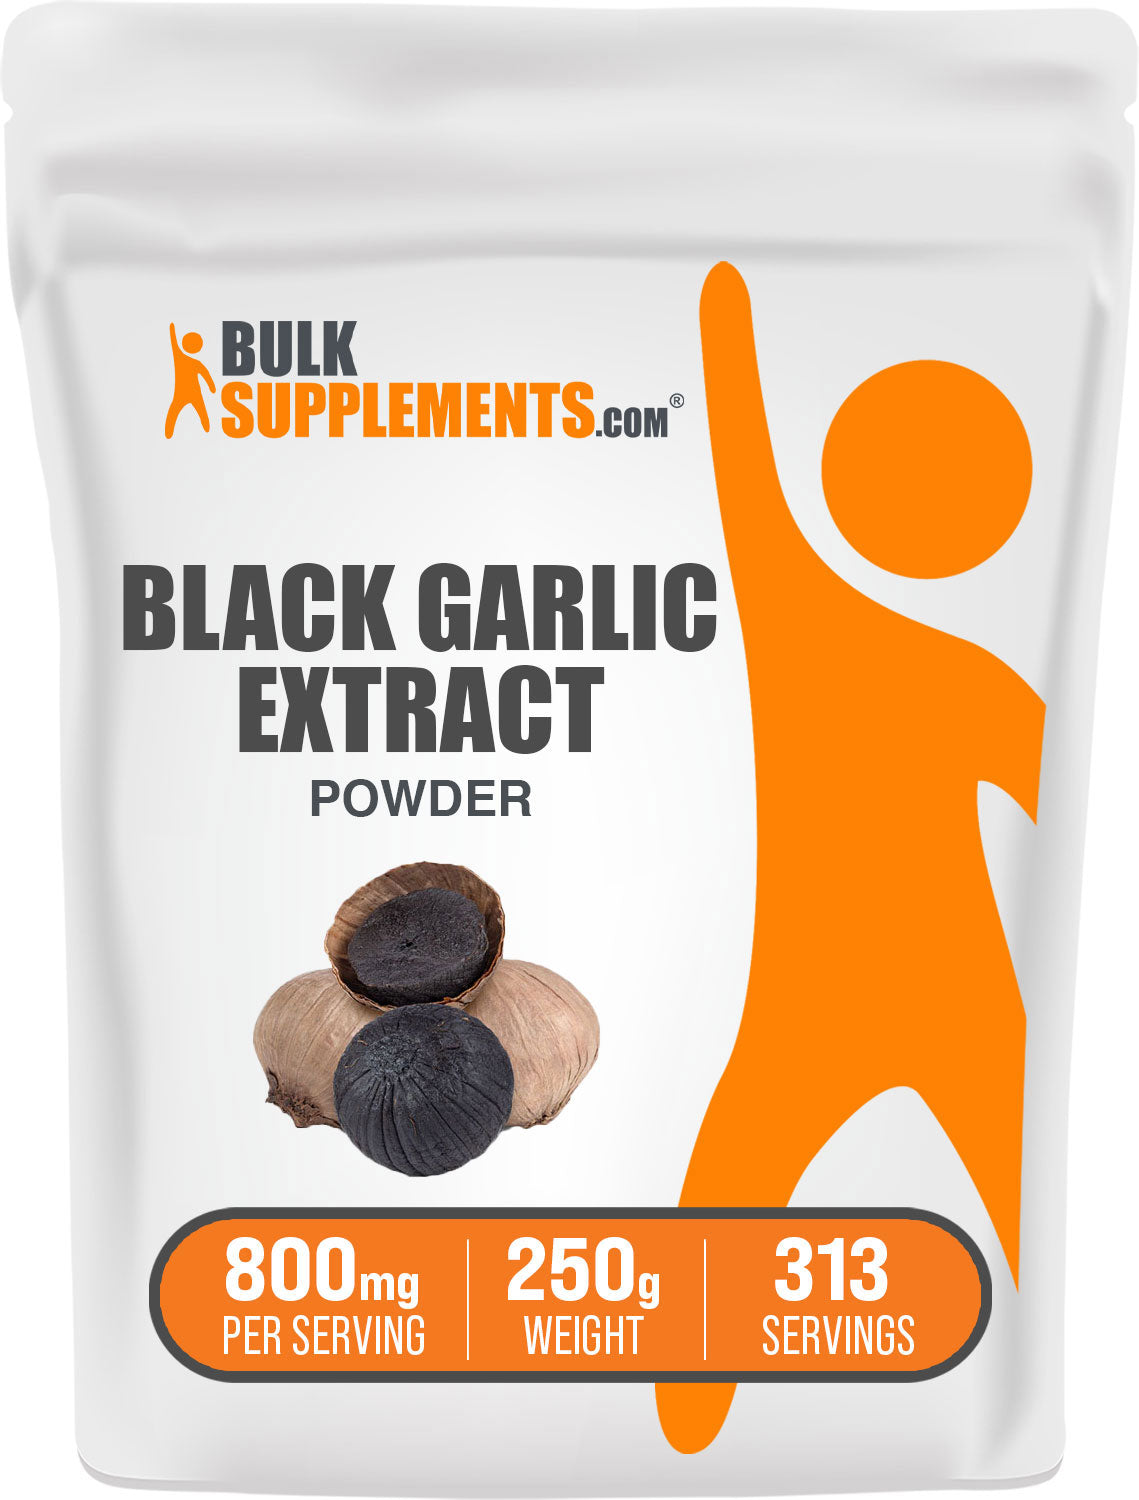 BulkSupplements.com Black garlic extract powder bag 250g